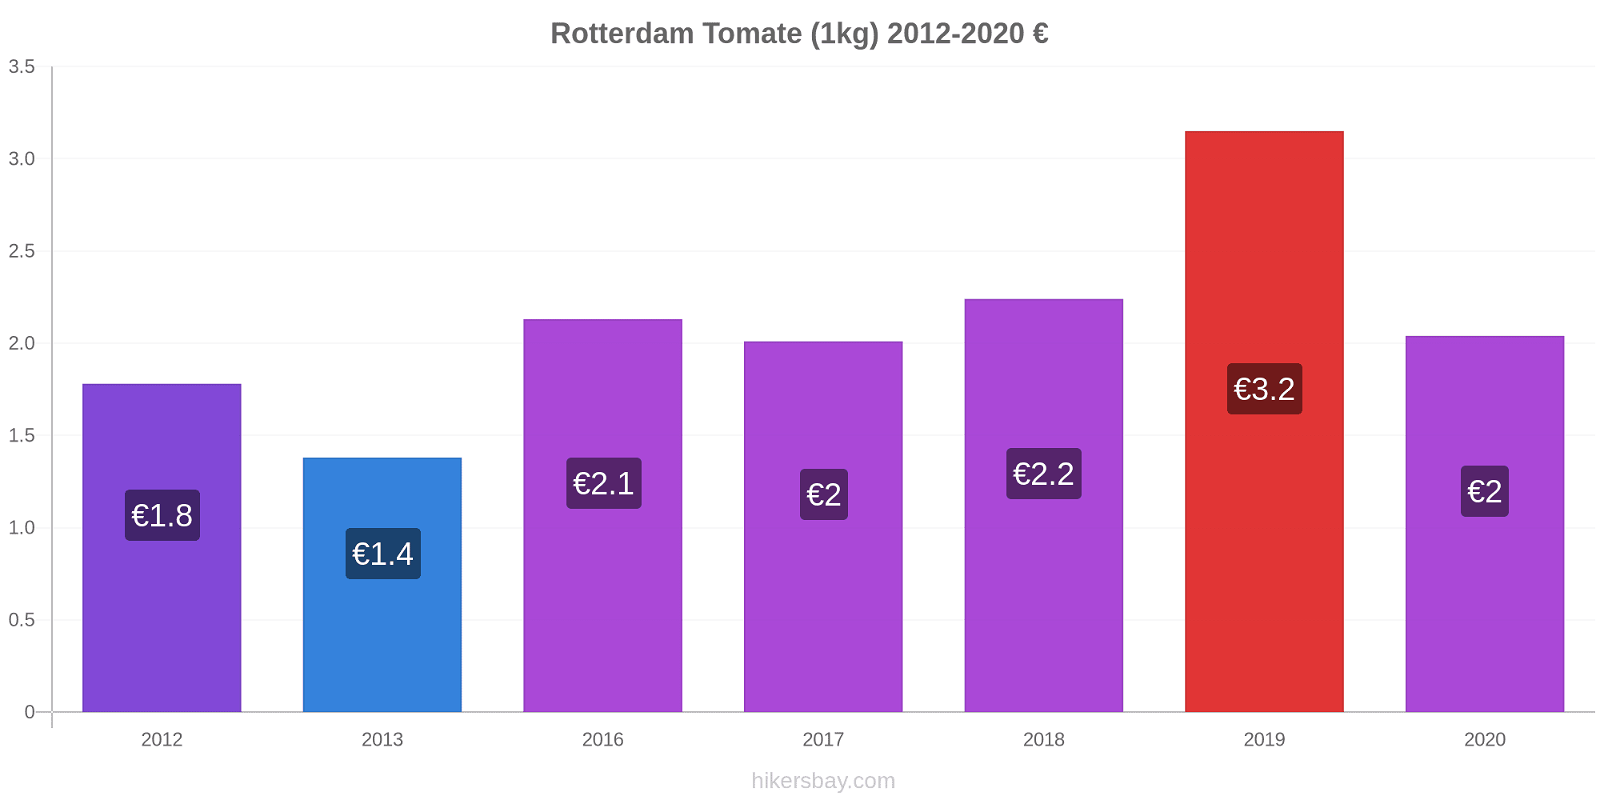 Rotterdam modificări de preț Tomate (1kg) hikersbay.com